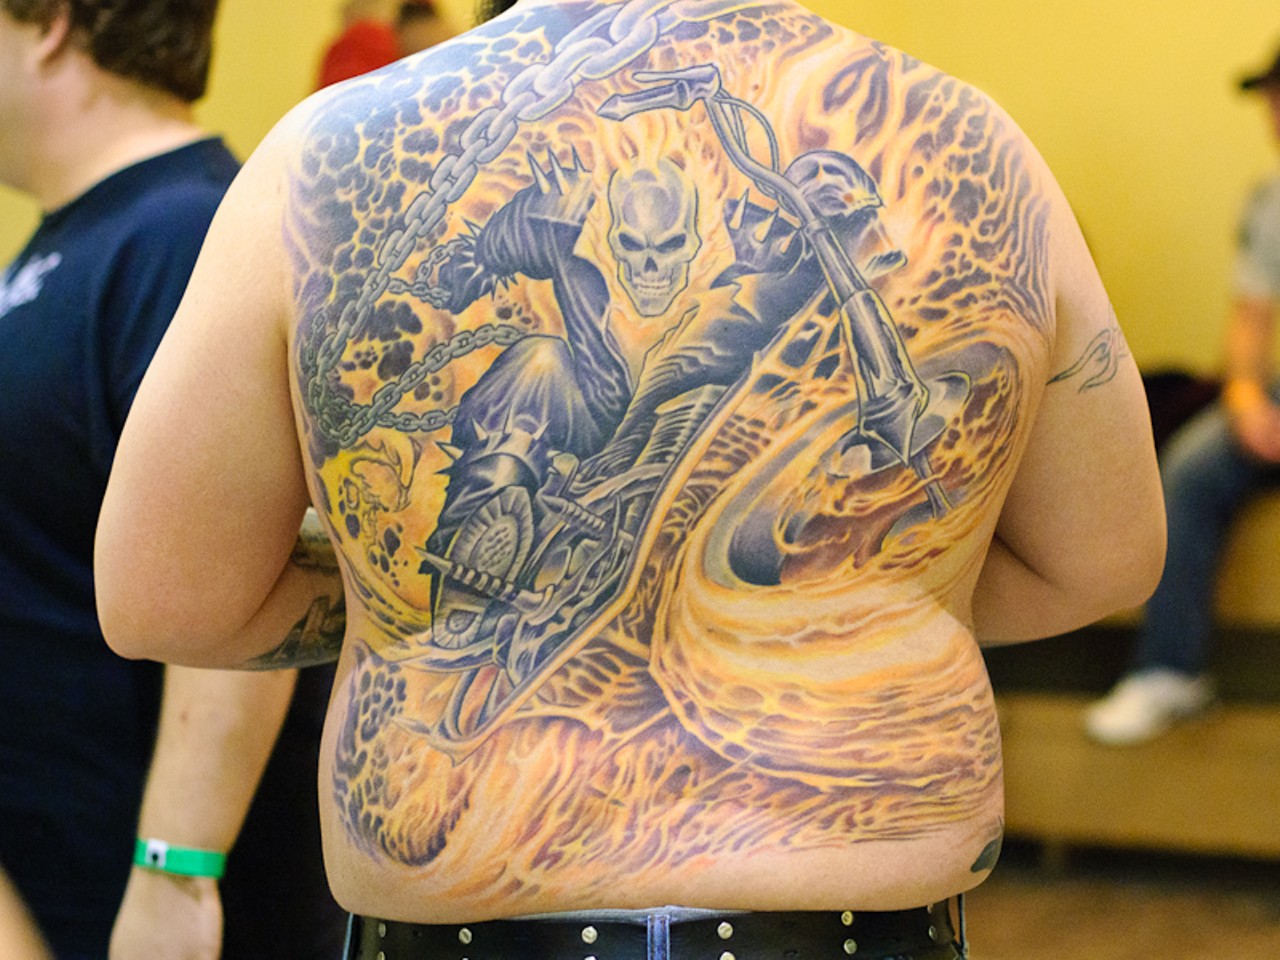 Josh Pruitt's Ghost Rider tattoo.